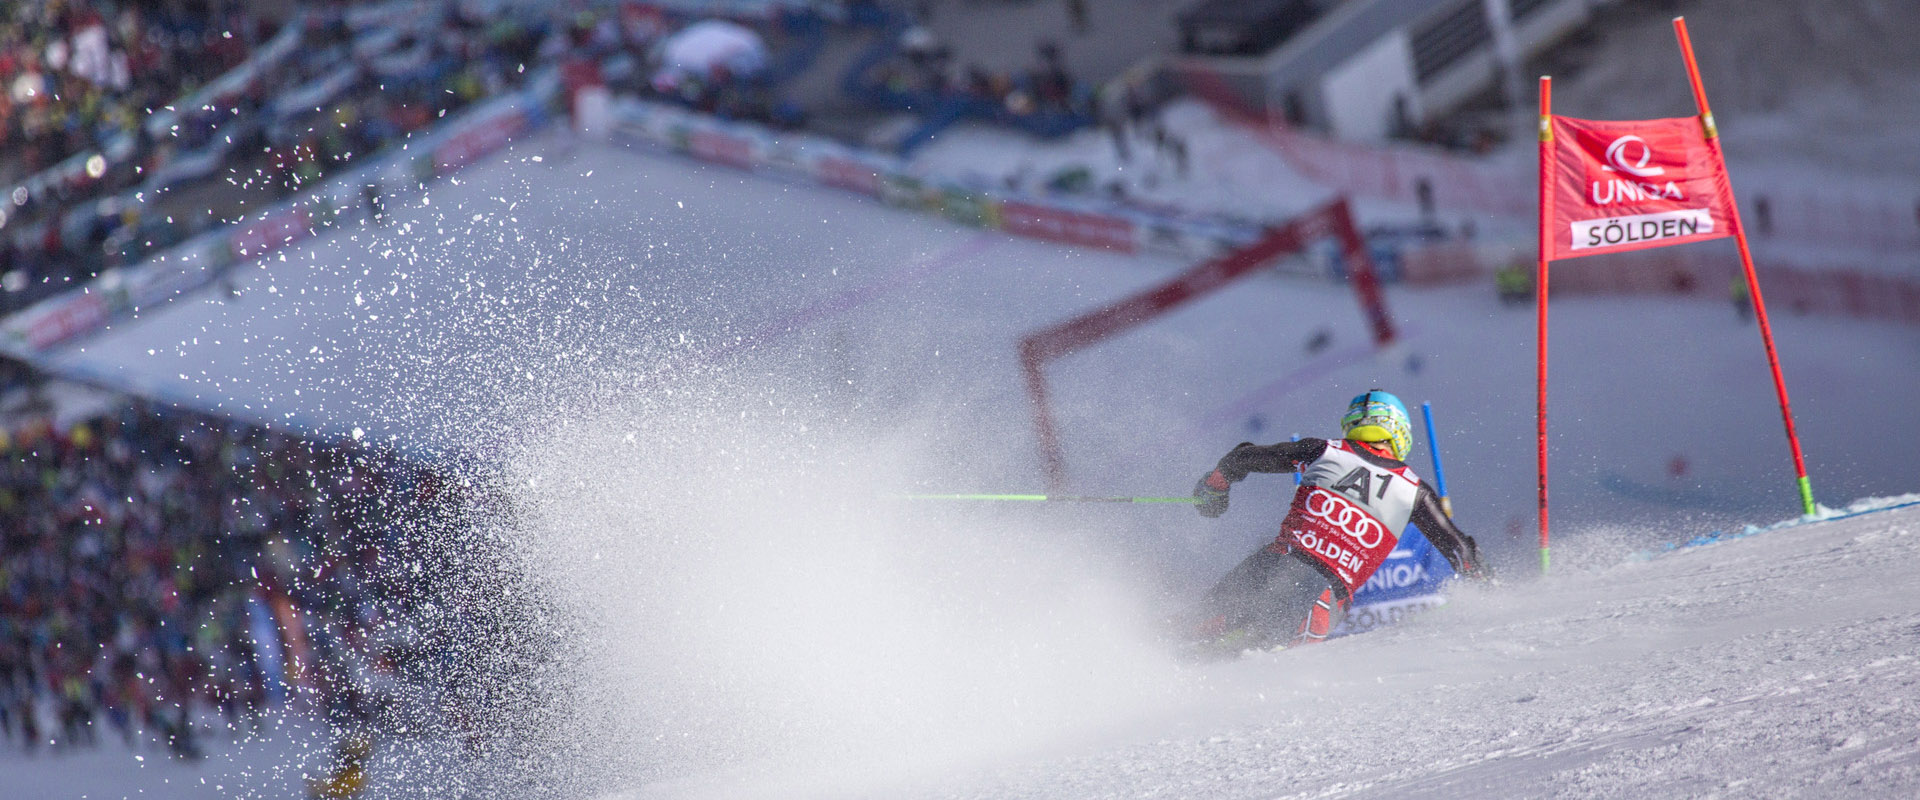 Alpiner Skiweltcup - Saison 2019 / 2020